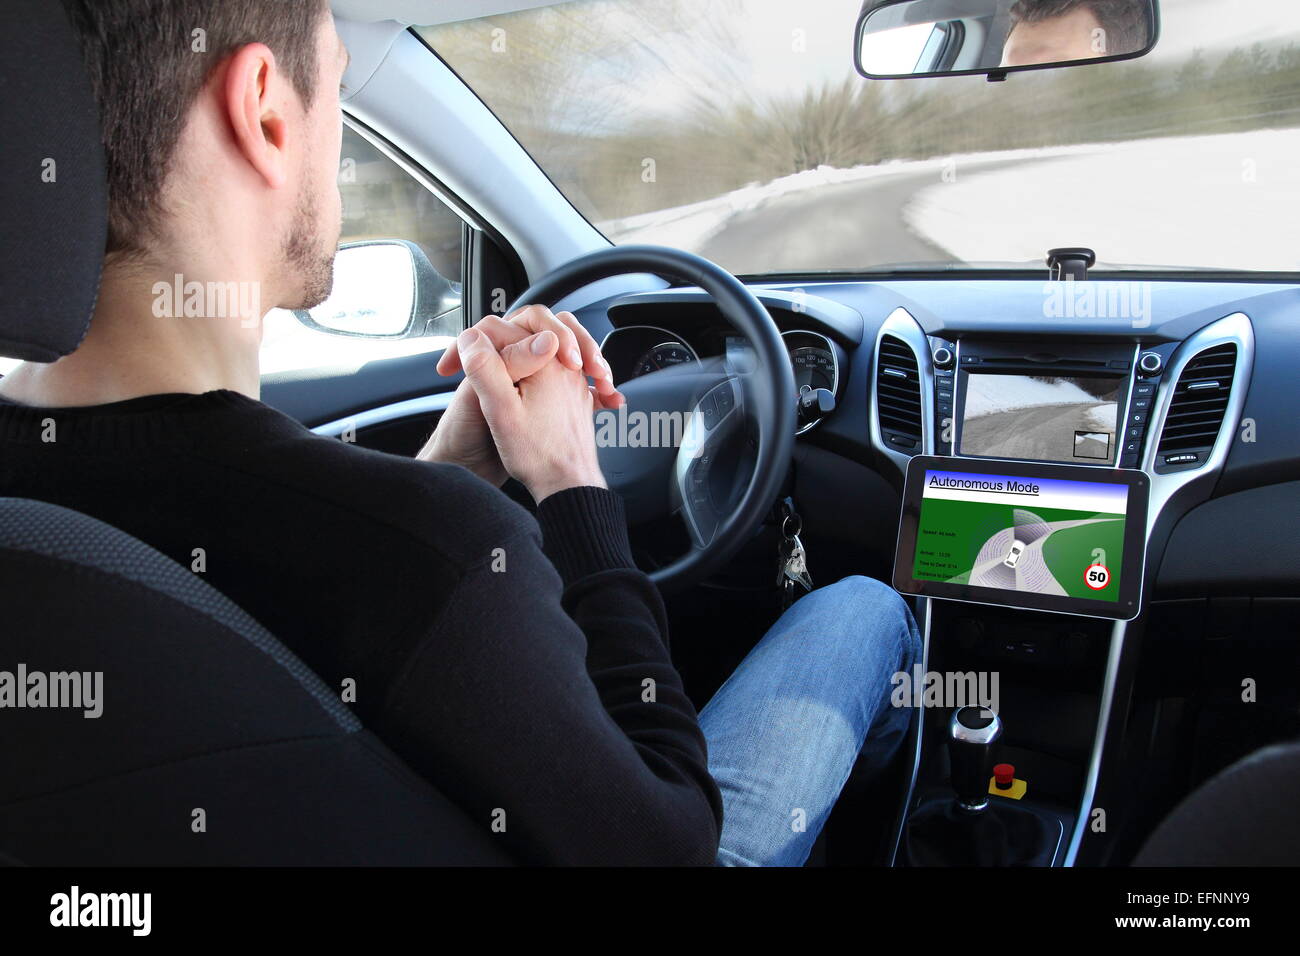 A man in a Autonomous driving  test vehicle Stock Photo